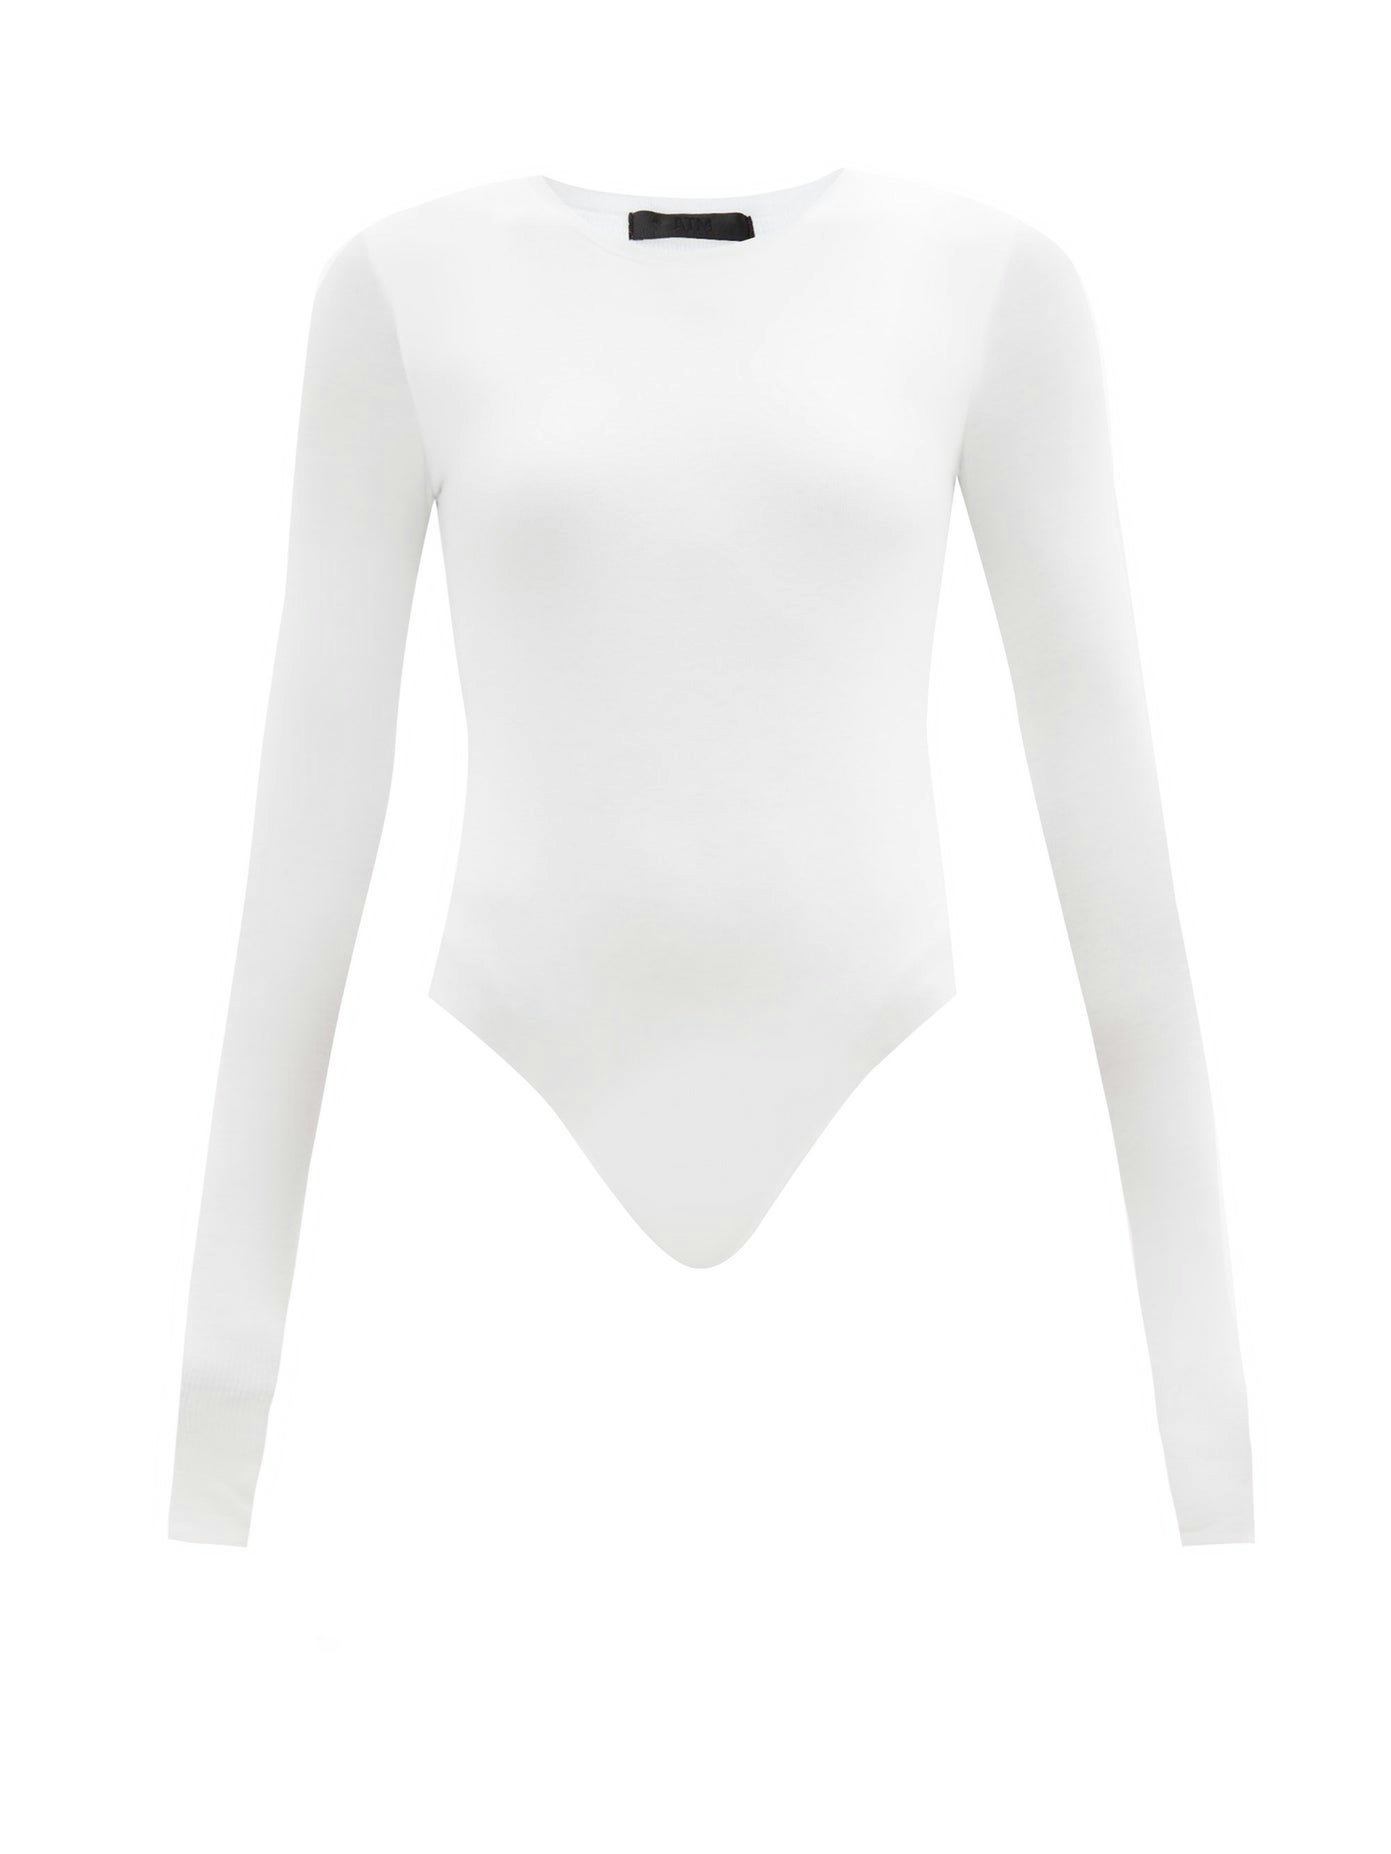 ZARA Bodysuit Rosie Huntington-Whitely Style  5 Ways to Wear the ZARA  Halter neck bodysuit like RHW 